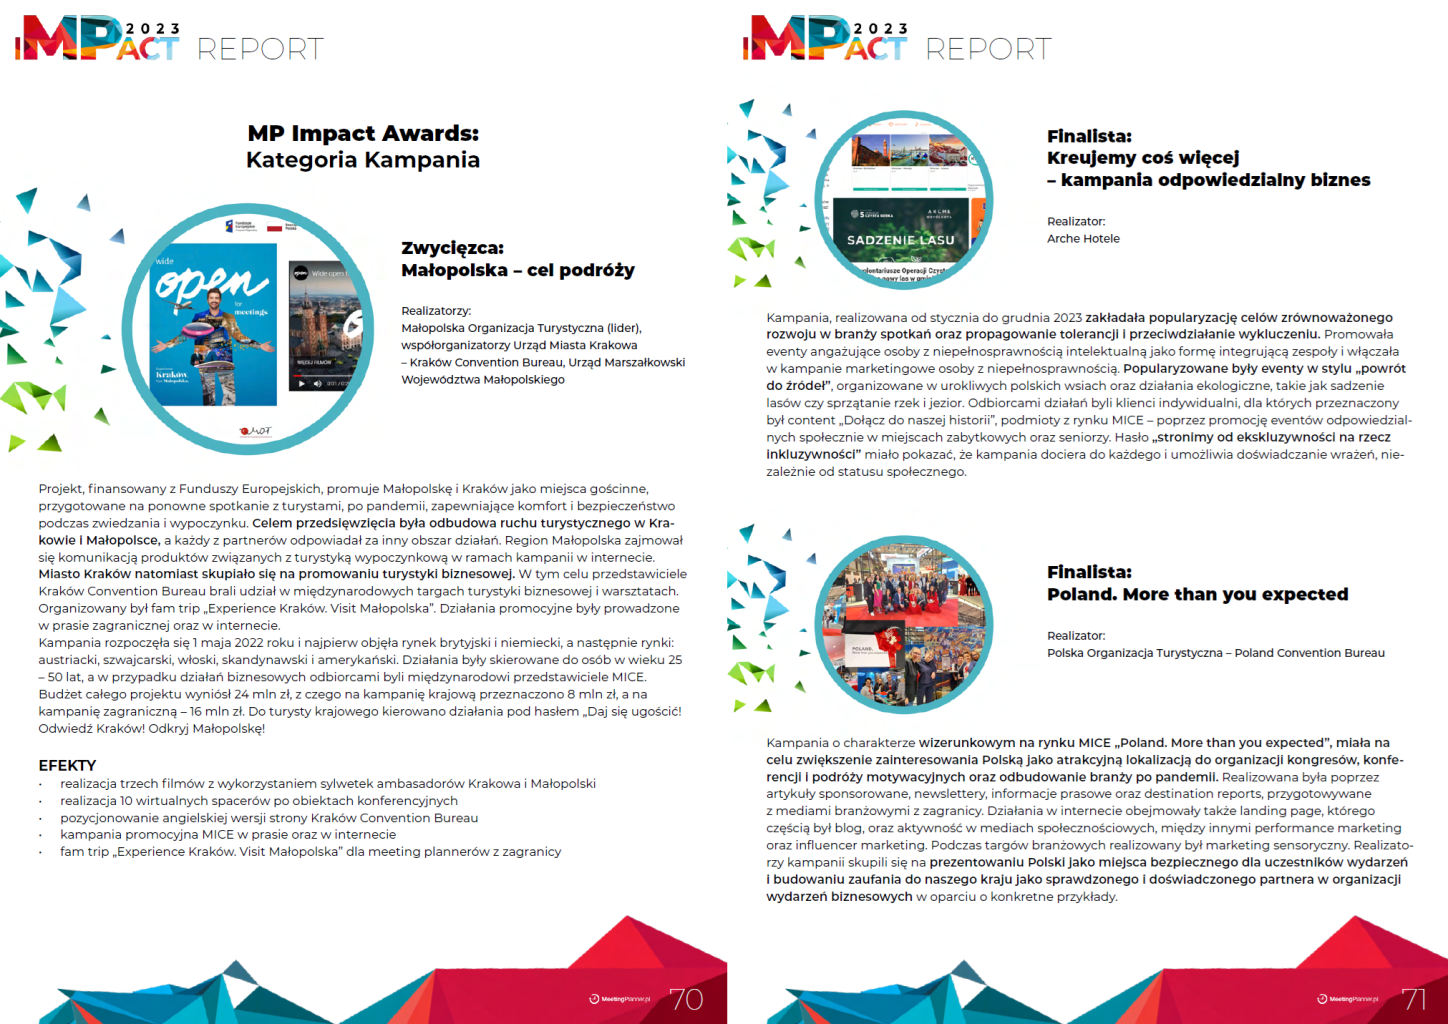 02-MP-Impact-Report-meetingplannerpl-poland-convention-bureau.png